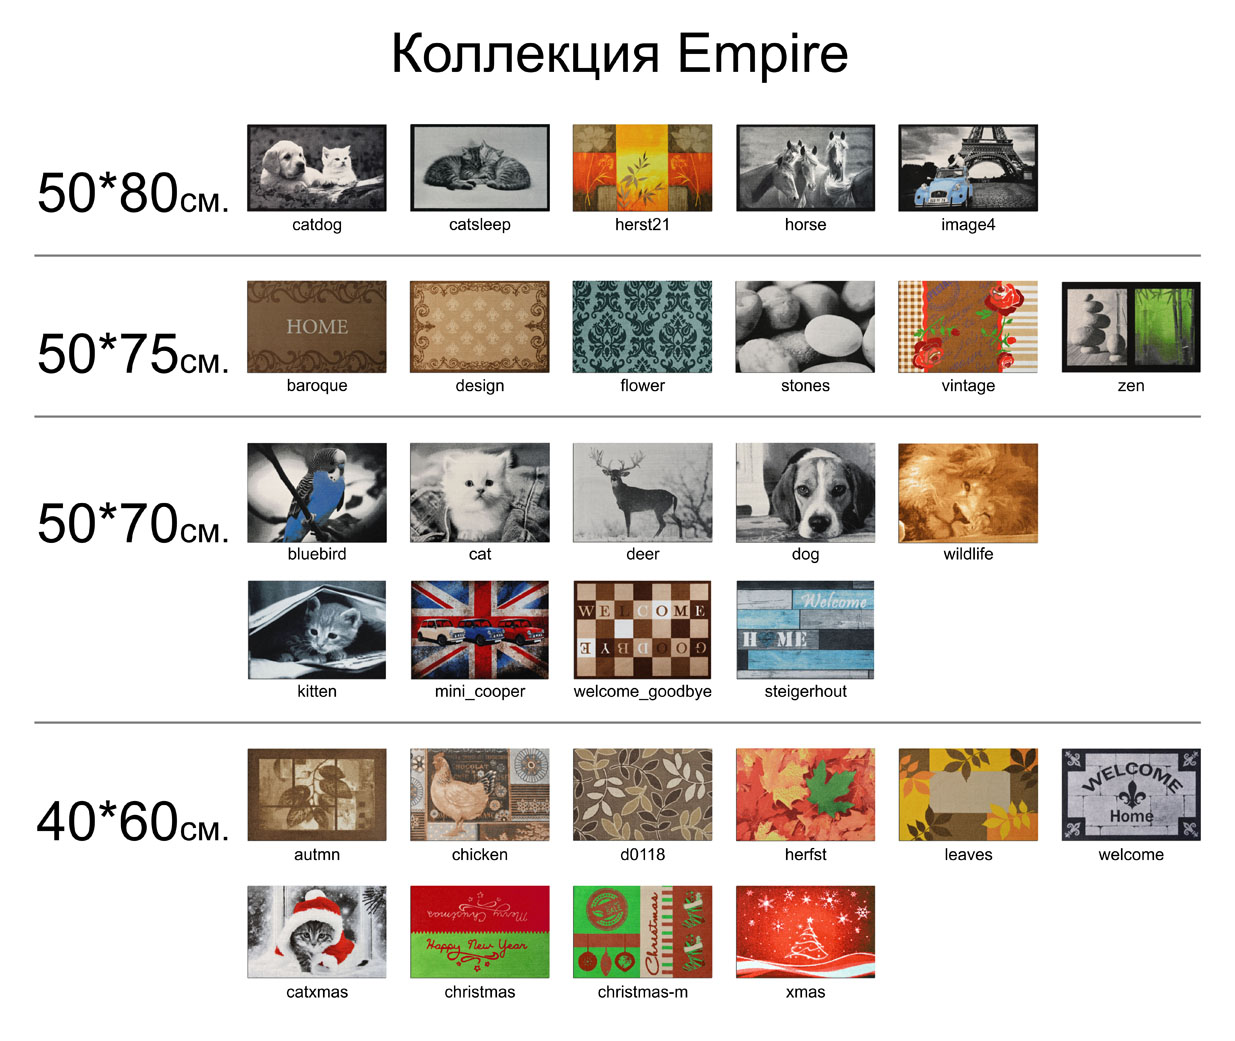 Вся коллекция Empire. Эмпайр коллекция. Empire collection обновление. Collection update